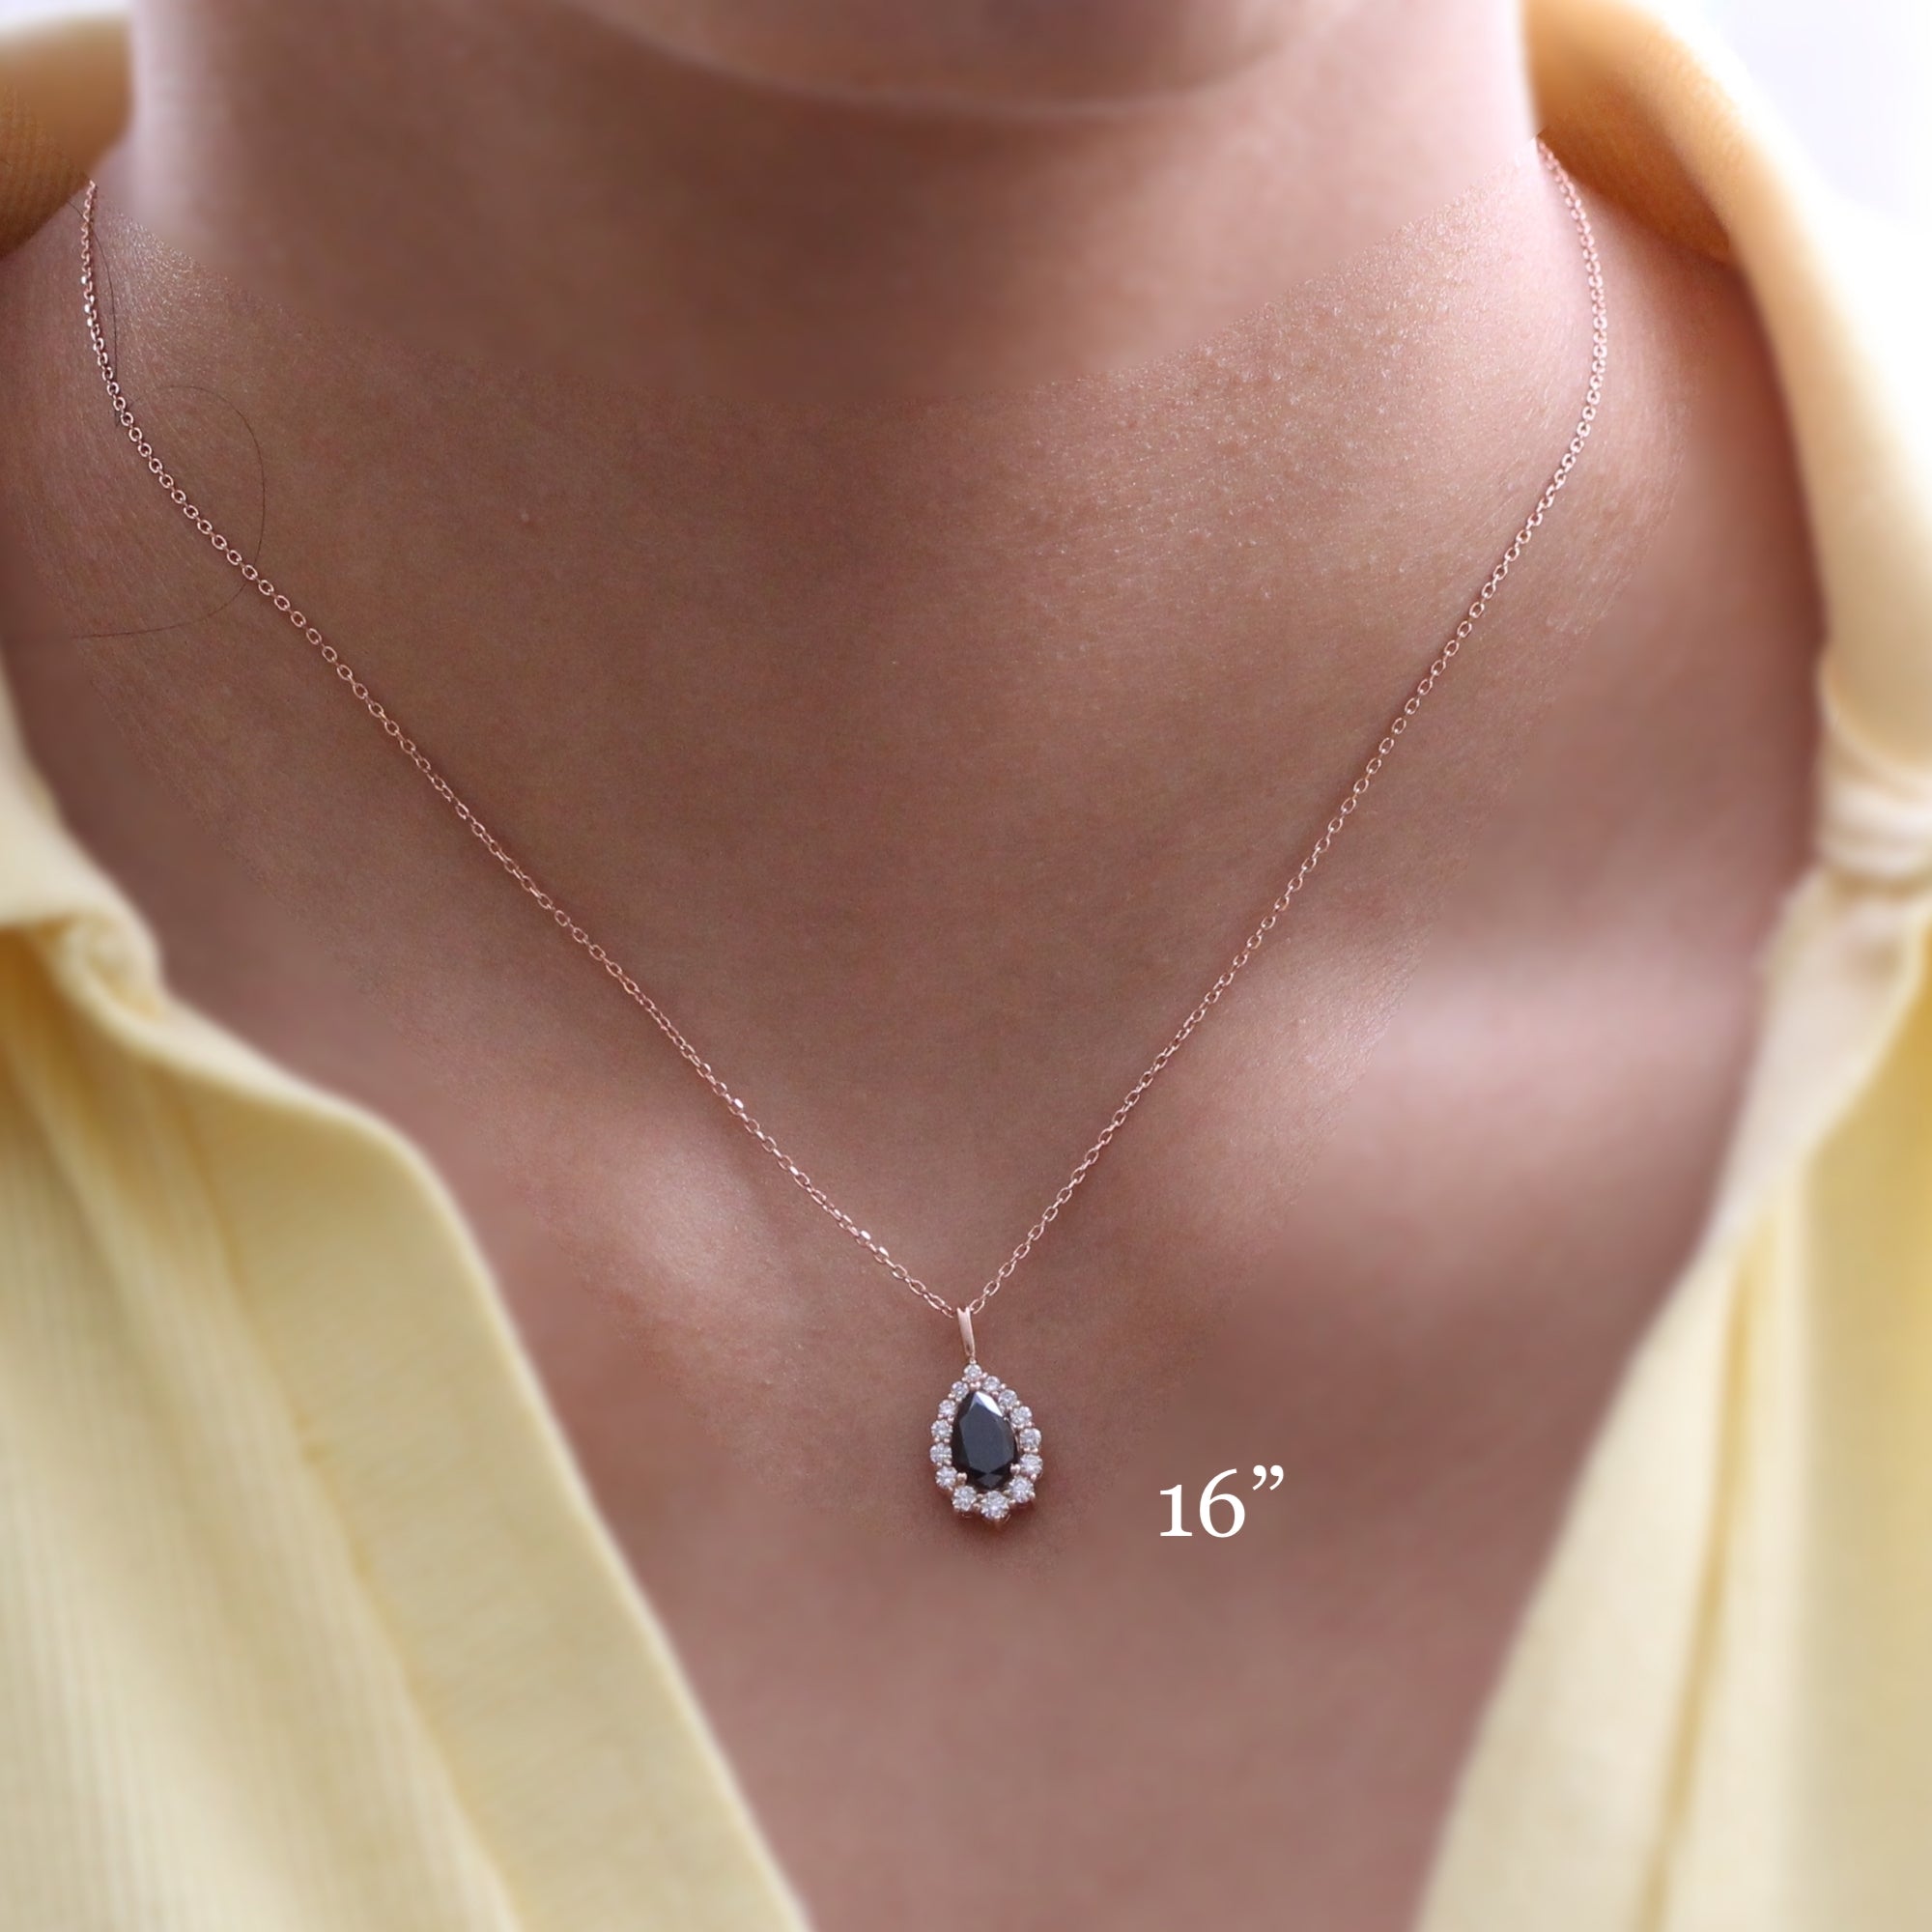 Pear black diamond necklace rose gold halo style black diamond drop pendant necklace la more design jewelry